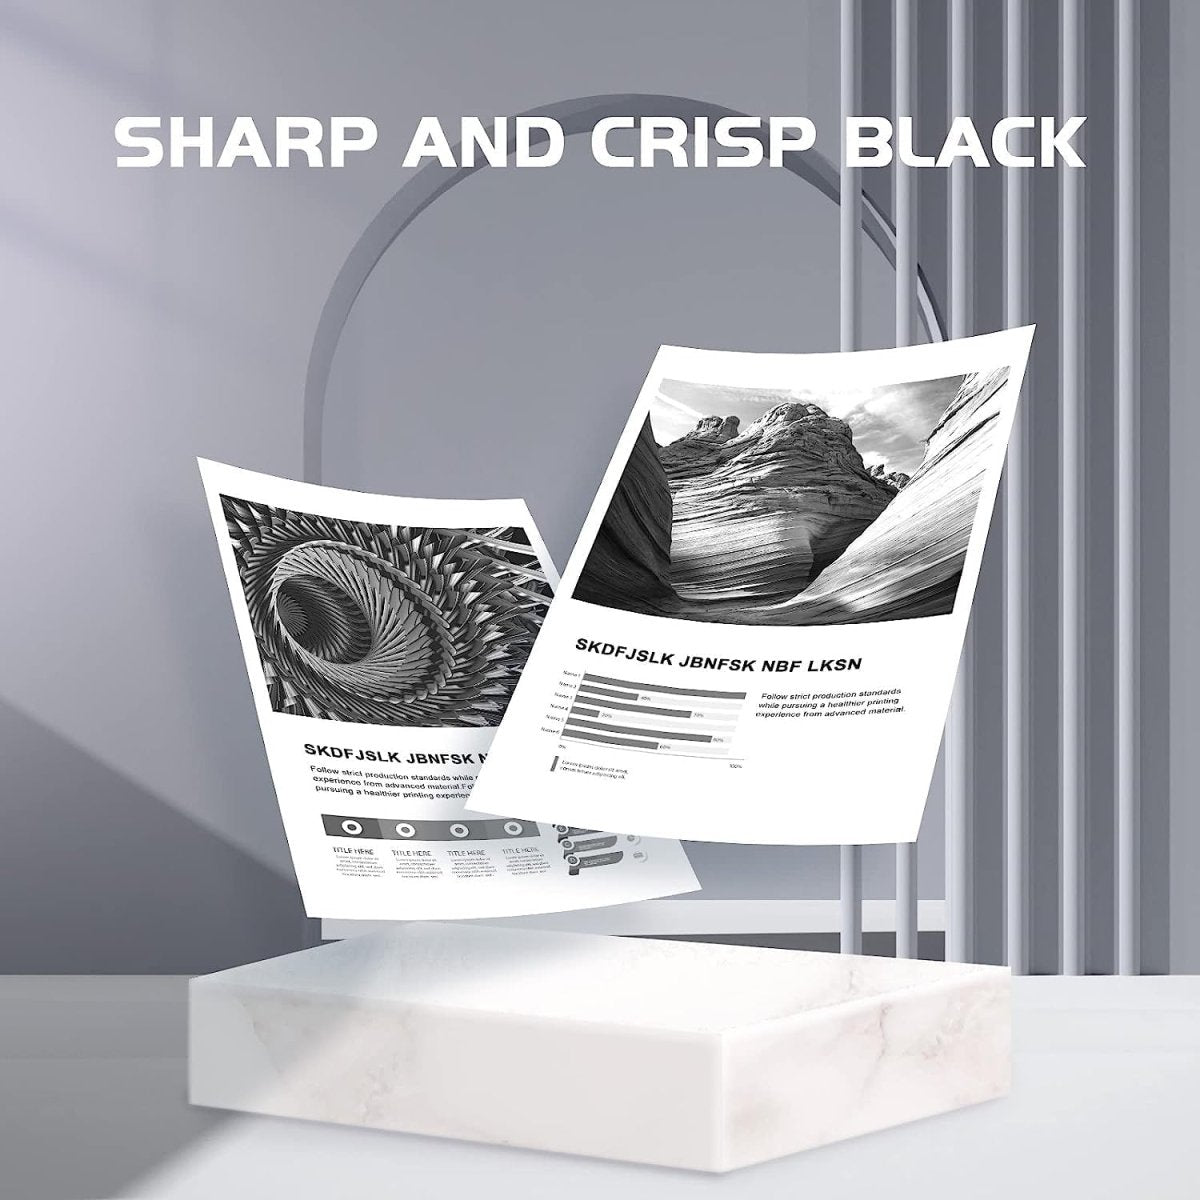 Sharp and crips black epson-222xl-ink-cartridges-black-cyan-magenta-yellow